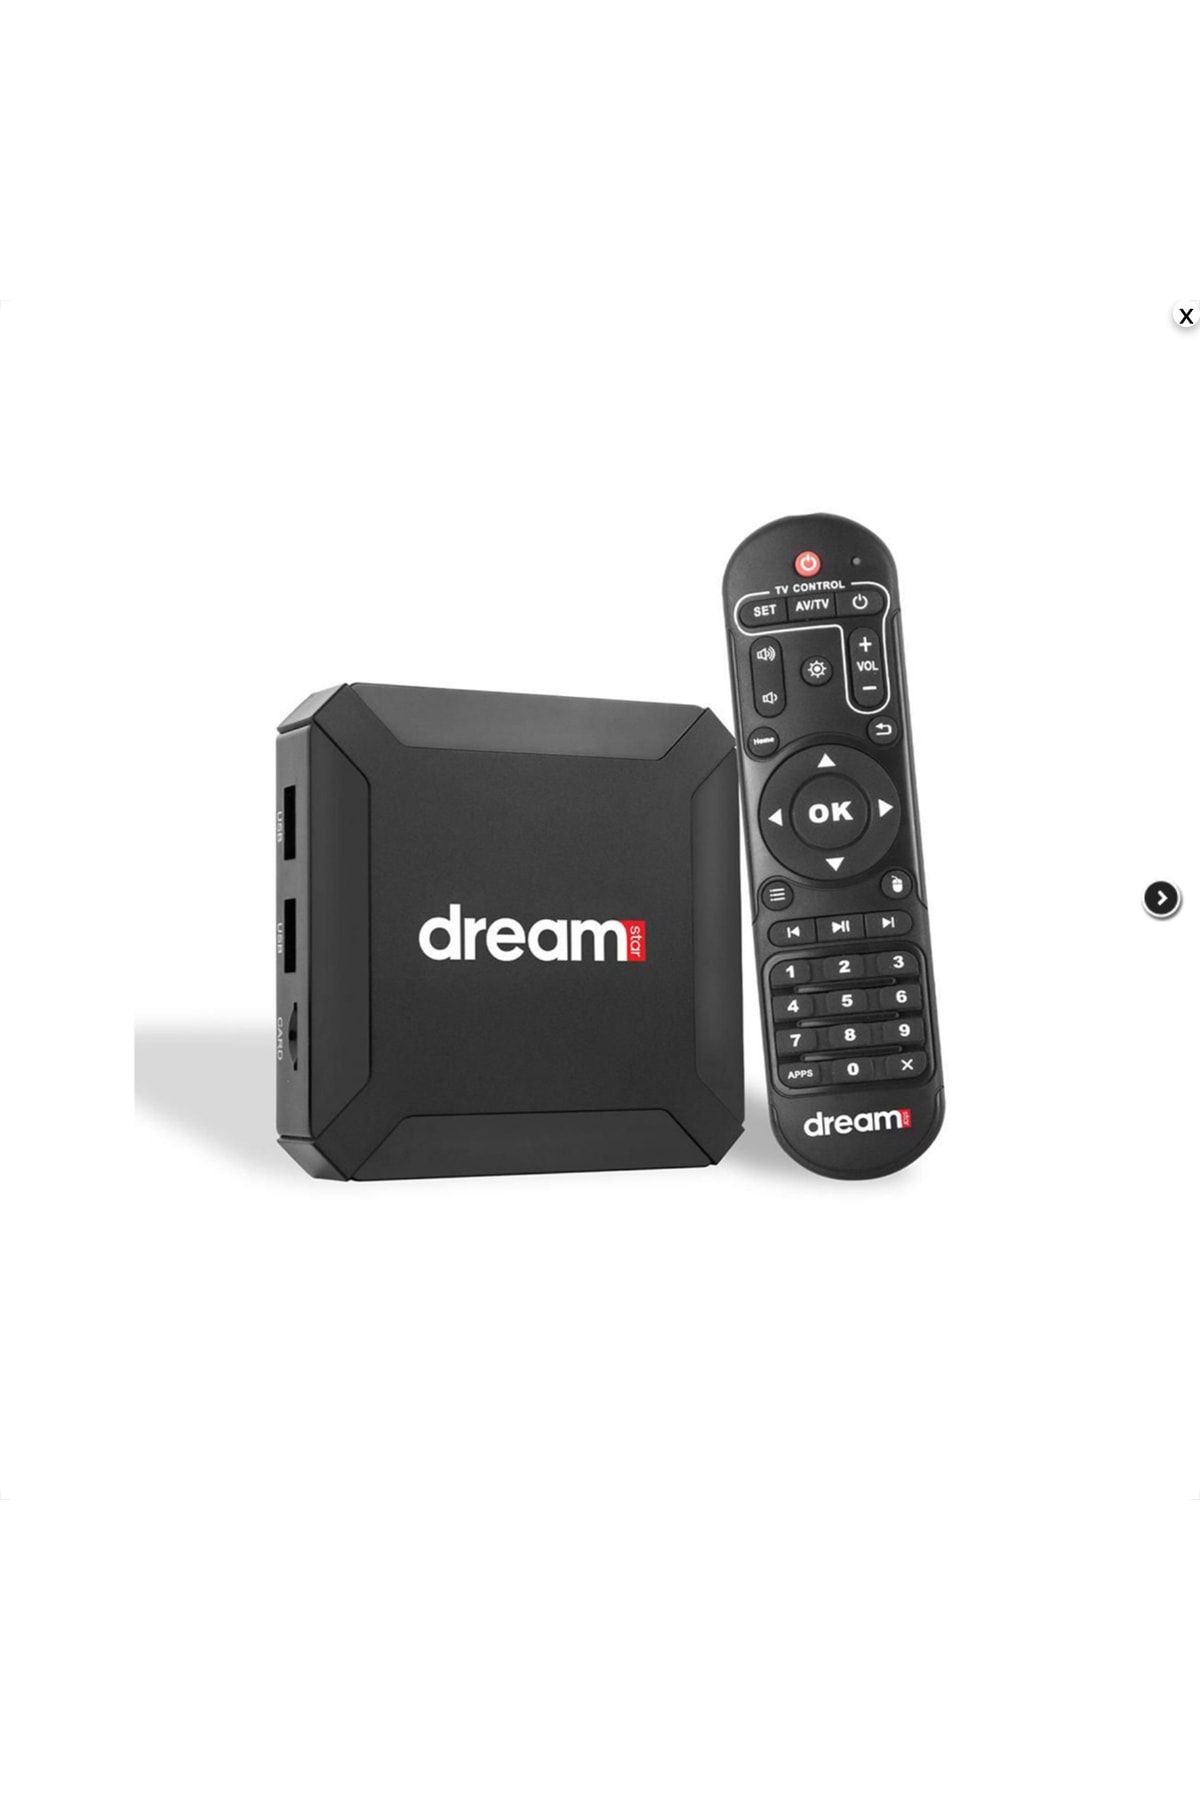 Dreamstar C1 16gb Android Tv Box